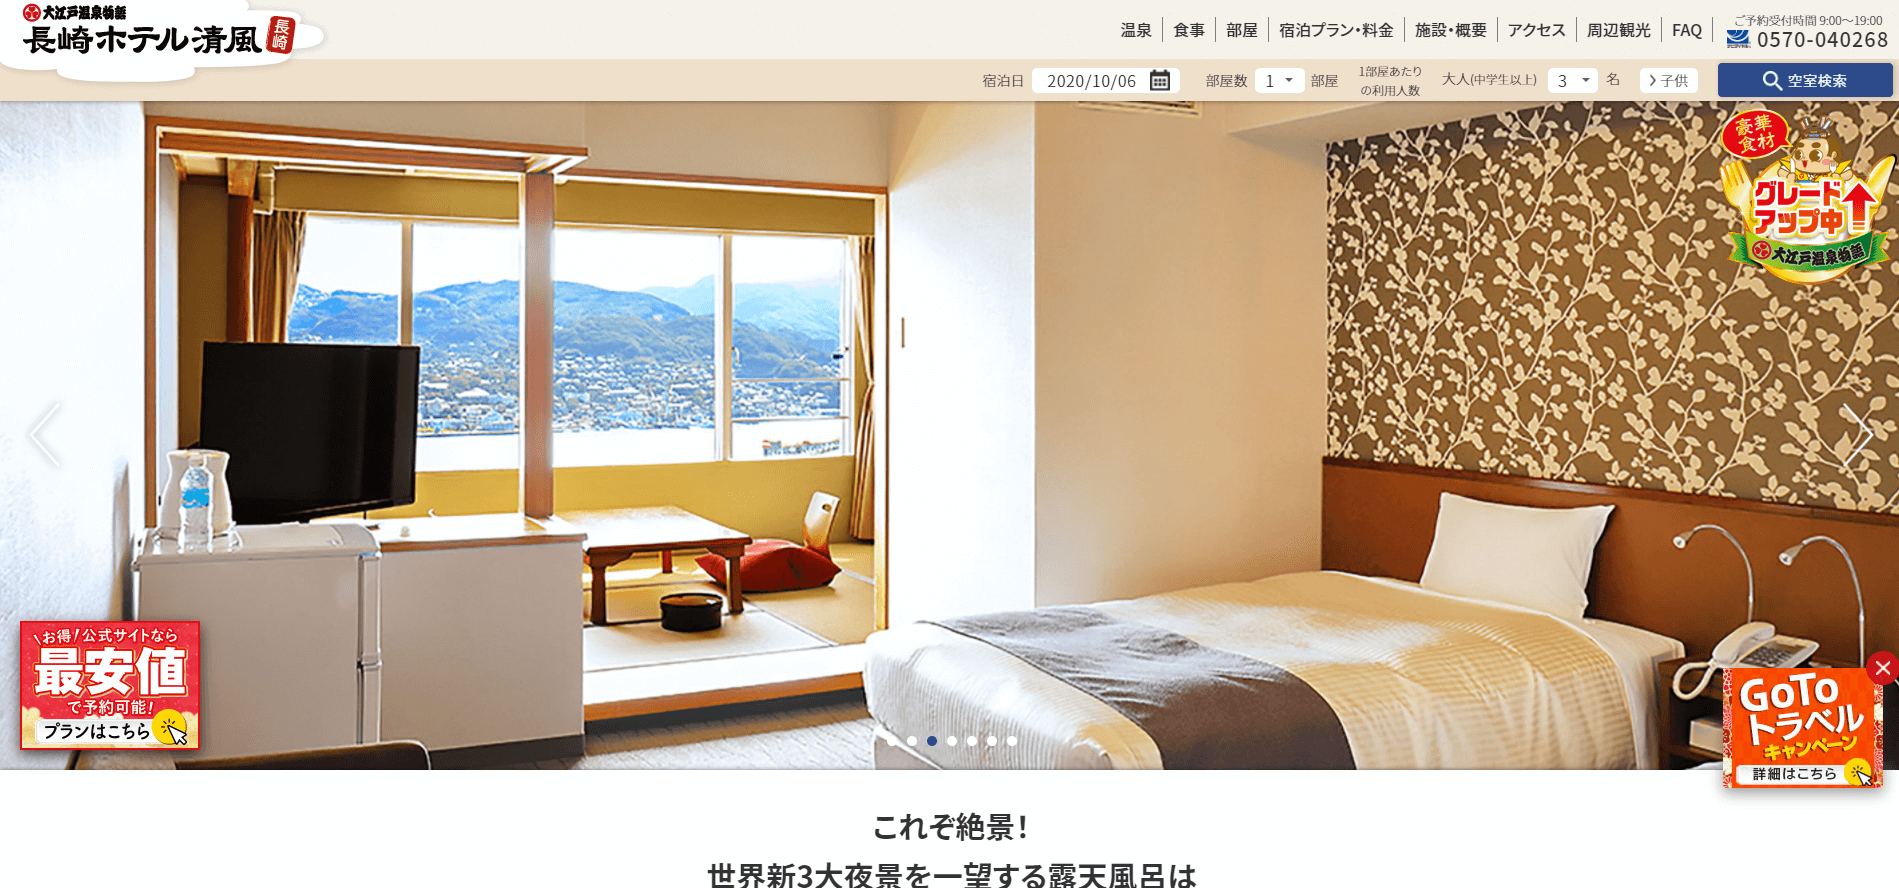 大江戸温泉物語 長崎ホテル清風の画像1